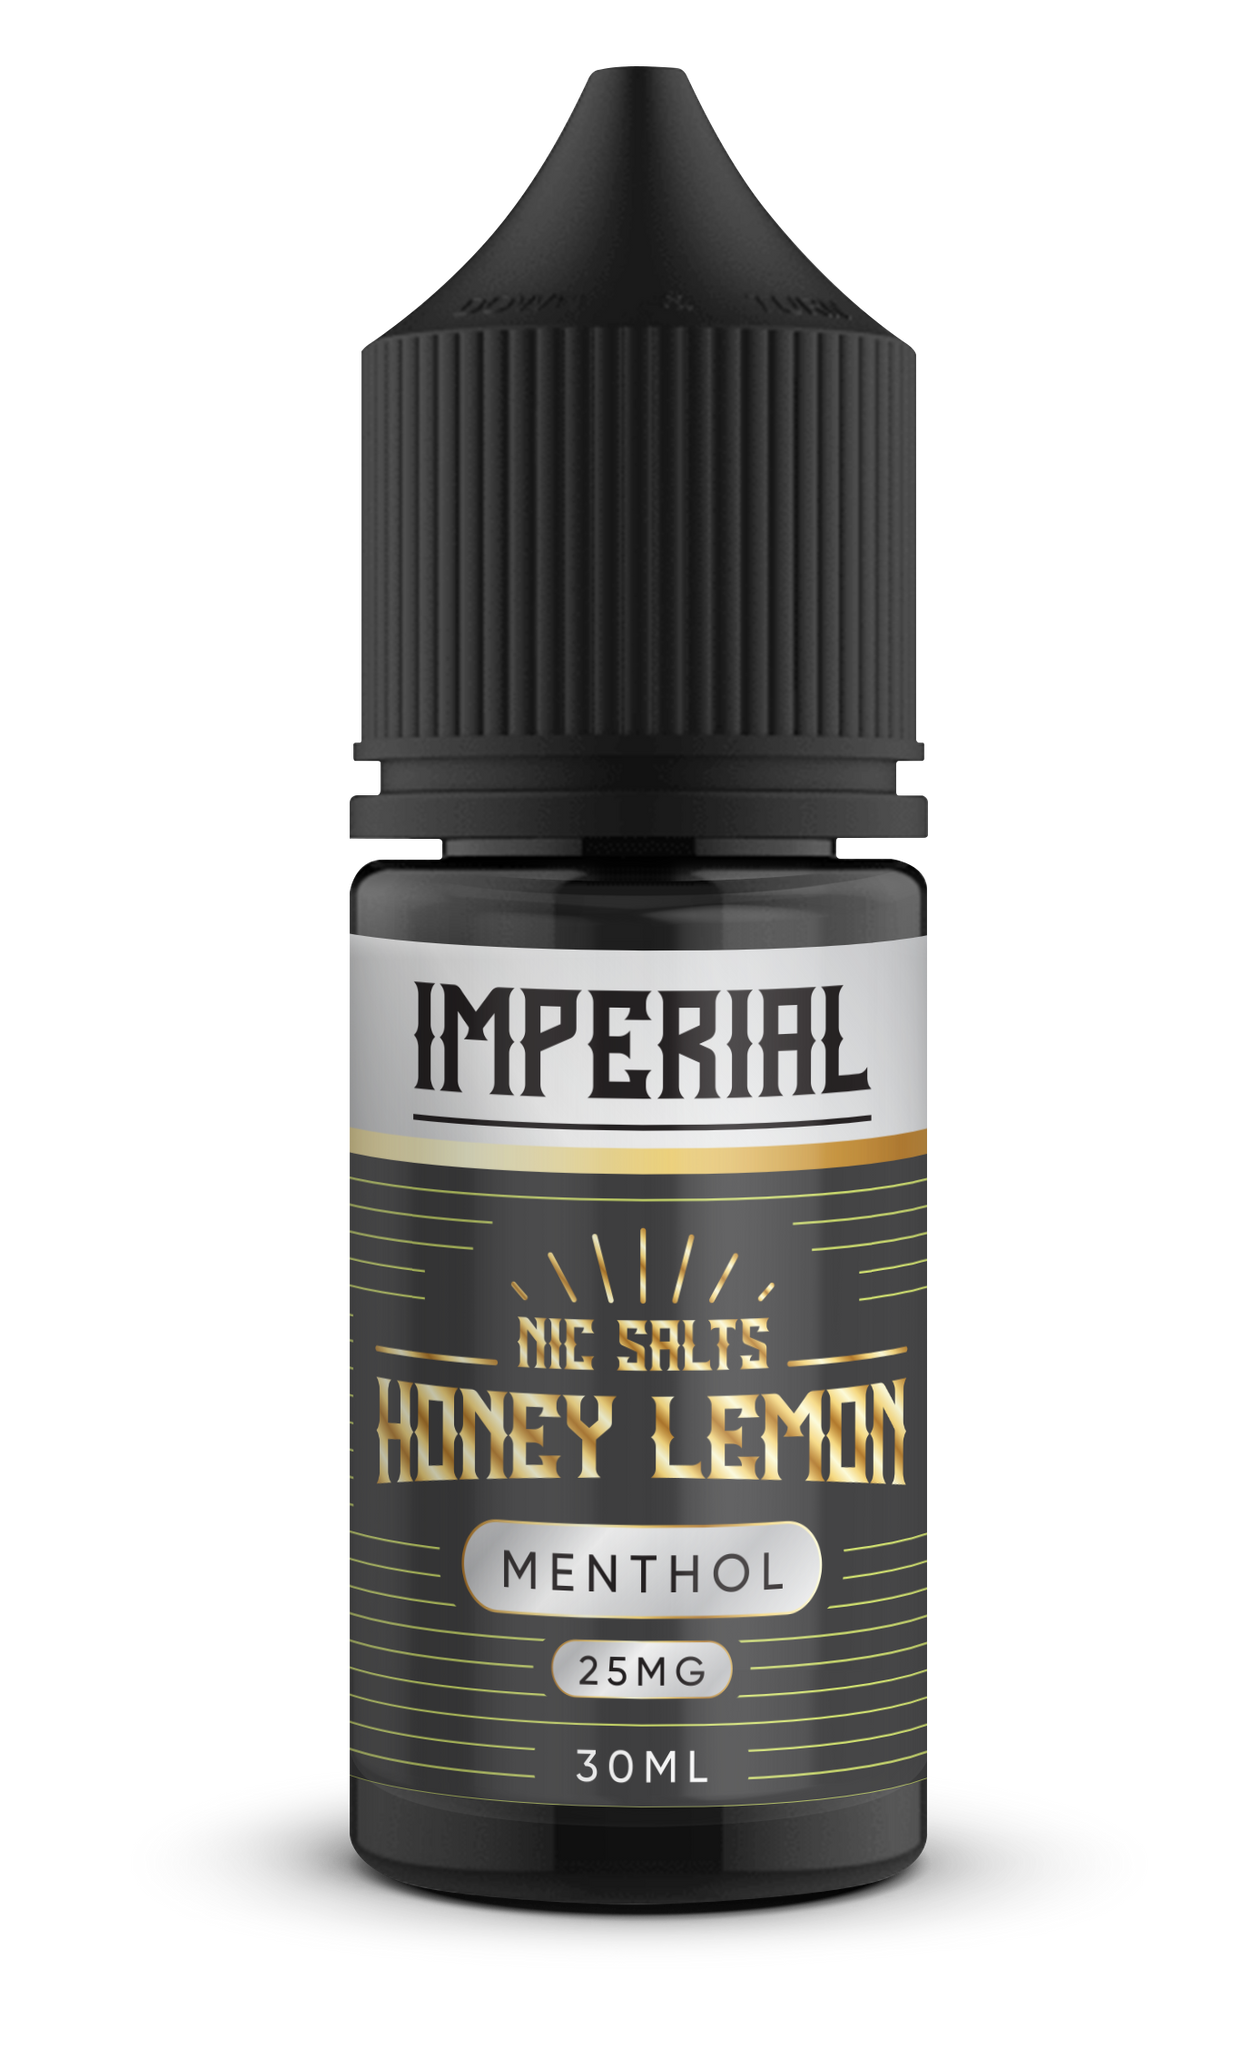 Imperial Nic Salt E-Liquid-Honey Lemon Menthol 25mg